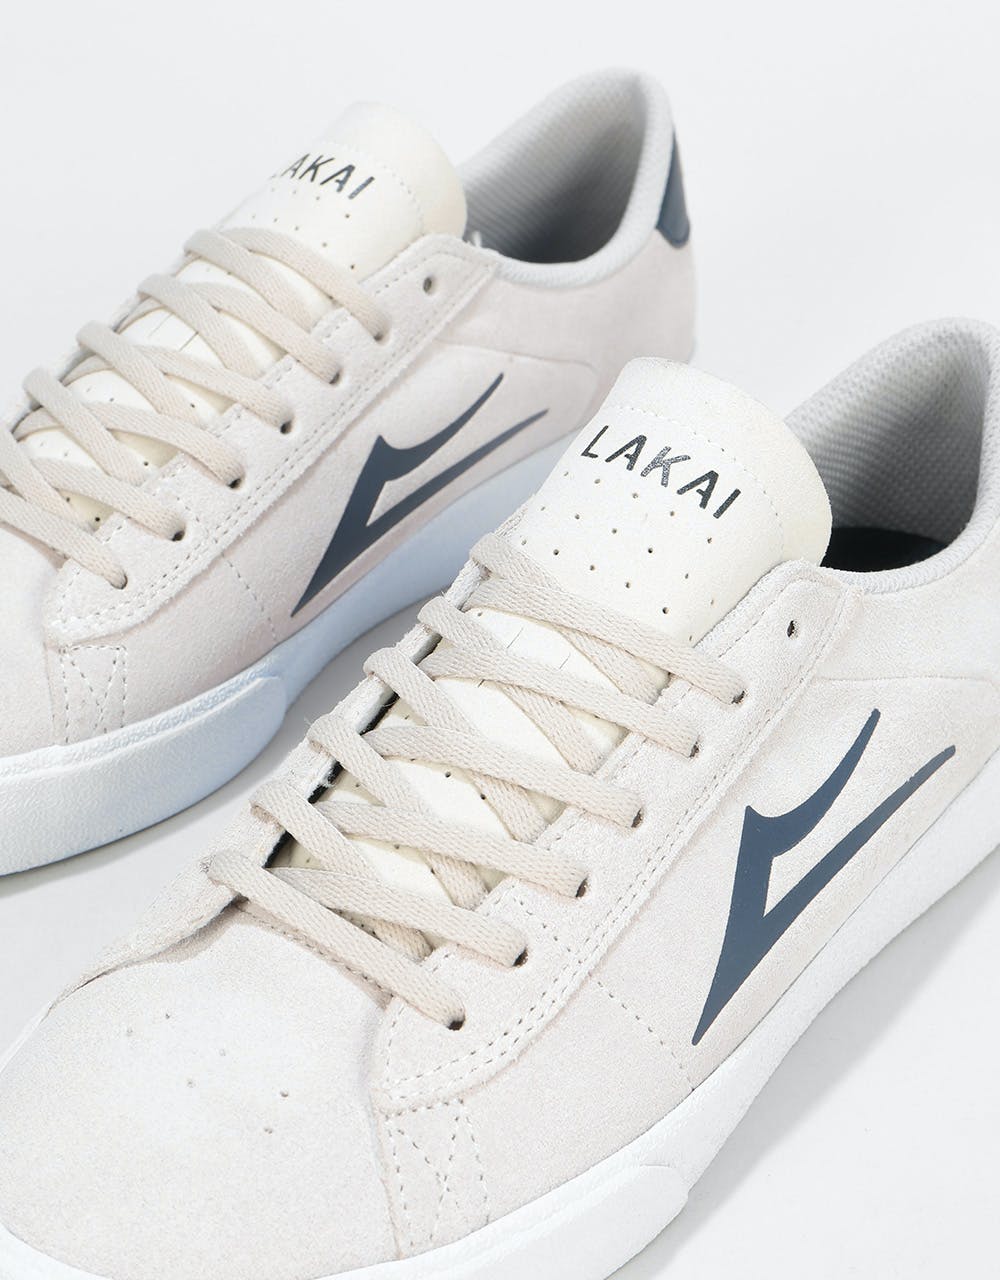 Lakai Newport Skate Shoes - White/Navy/Suede